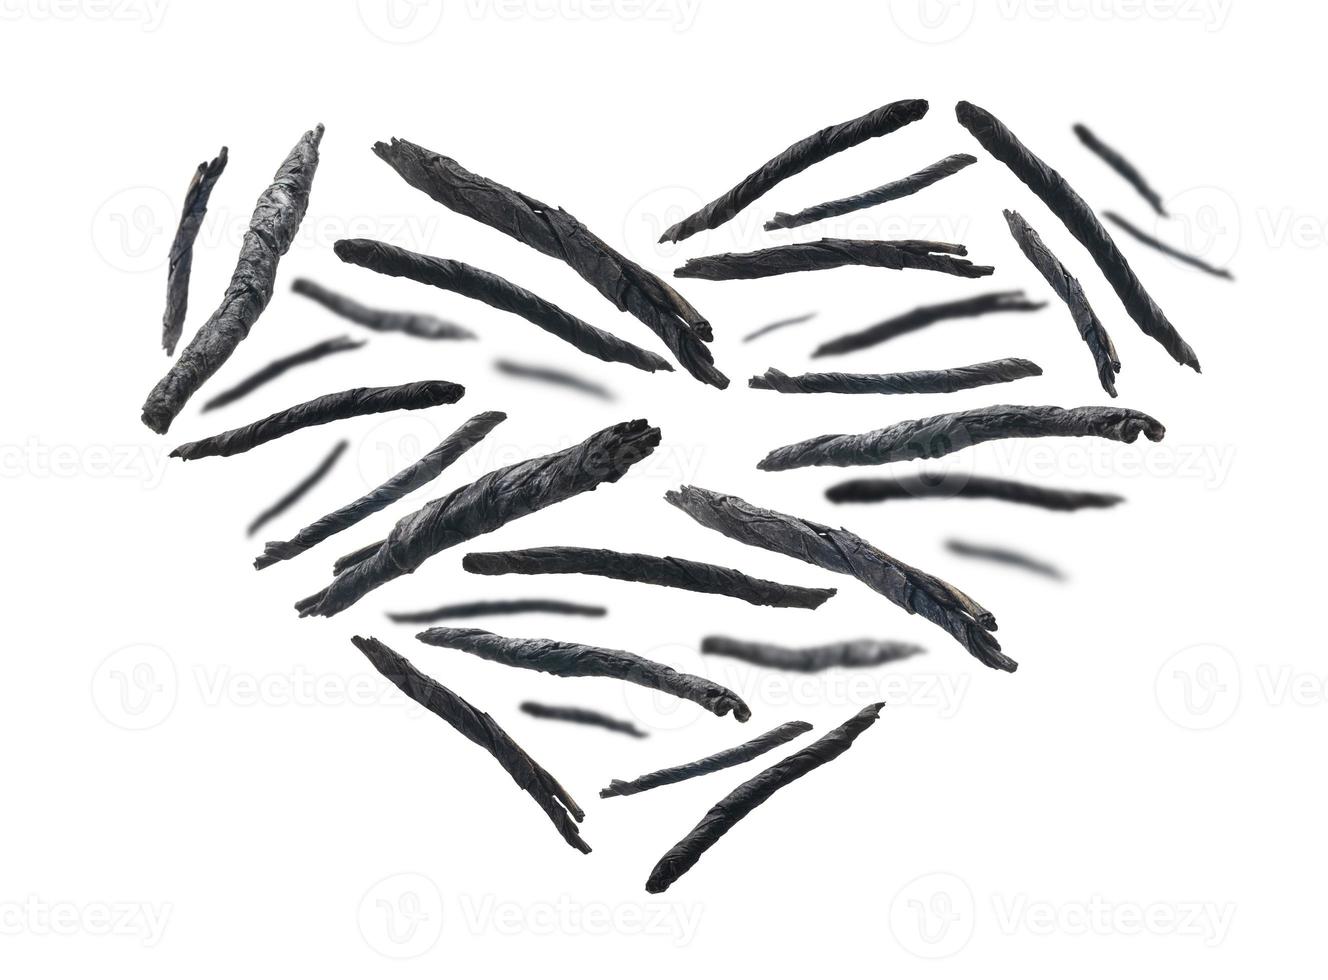 foglie contorte secche di tè kuding a forma di cuore su sfondo bianco foto